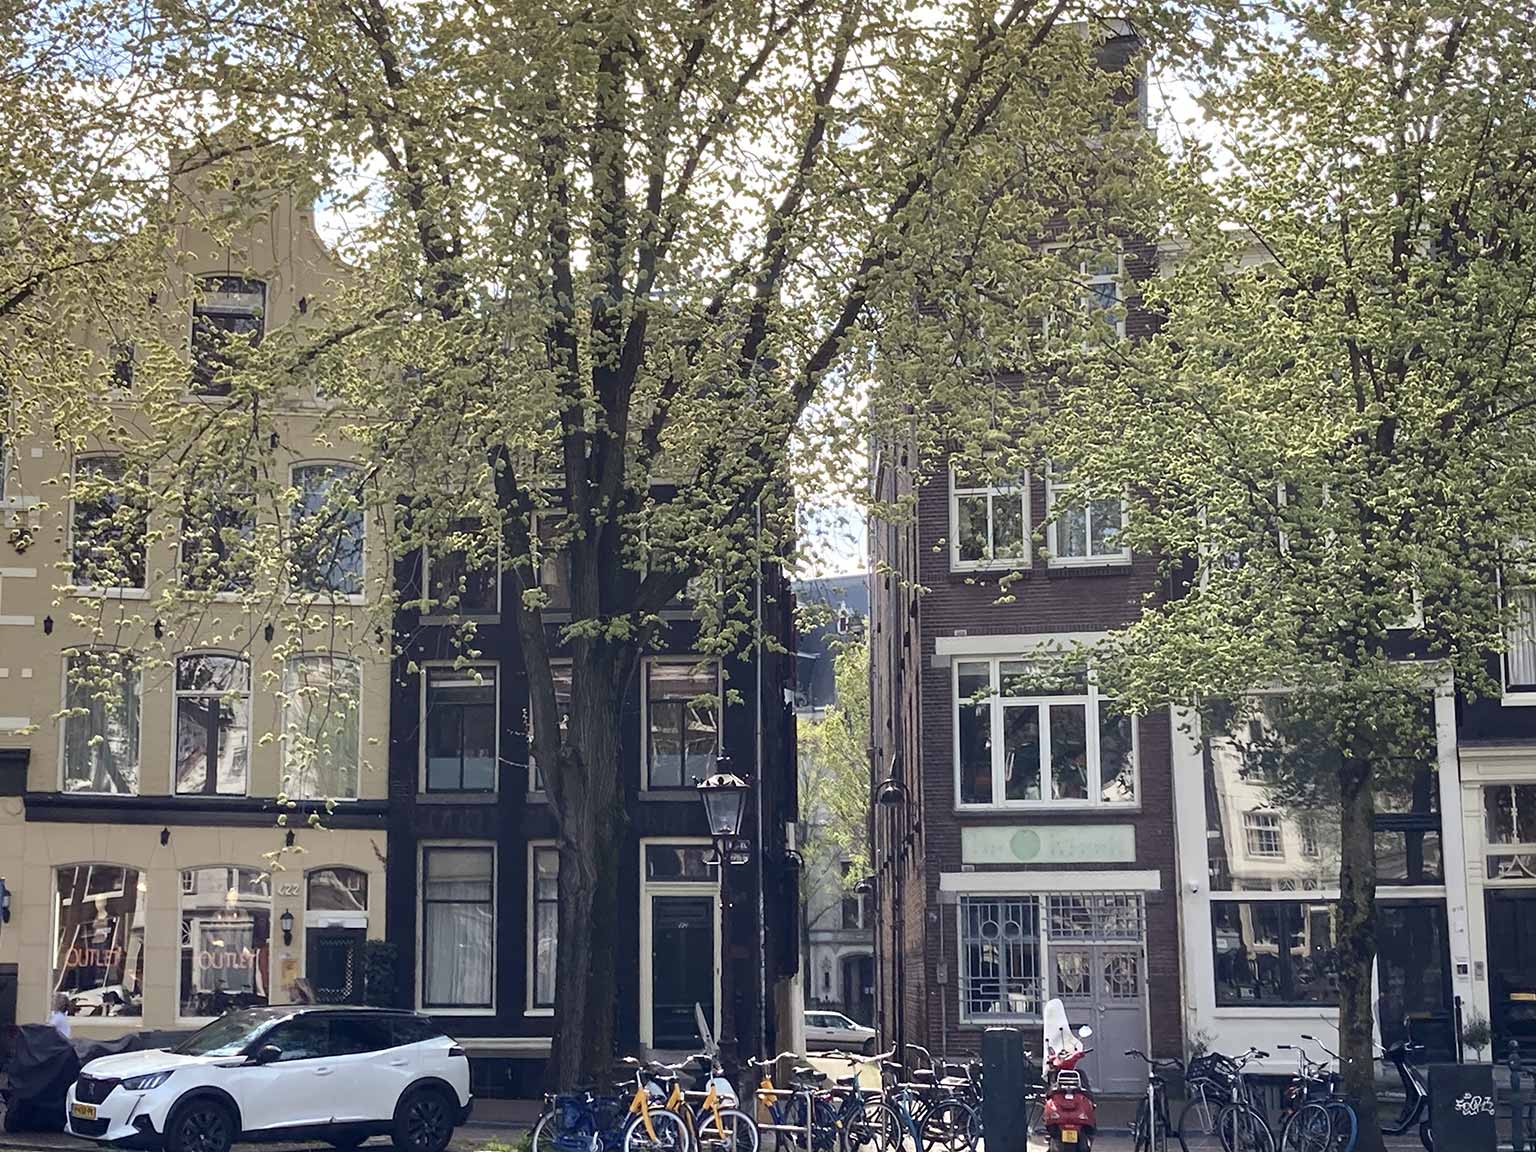 Dubbeleworststeeg, Amsterdam, seen from across the Singel towards the Herengracht